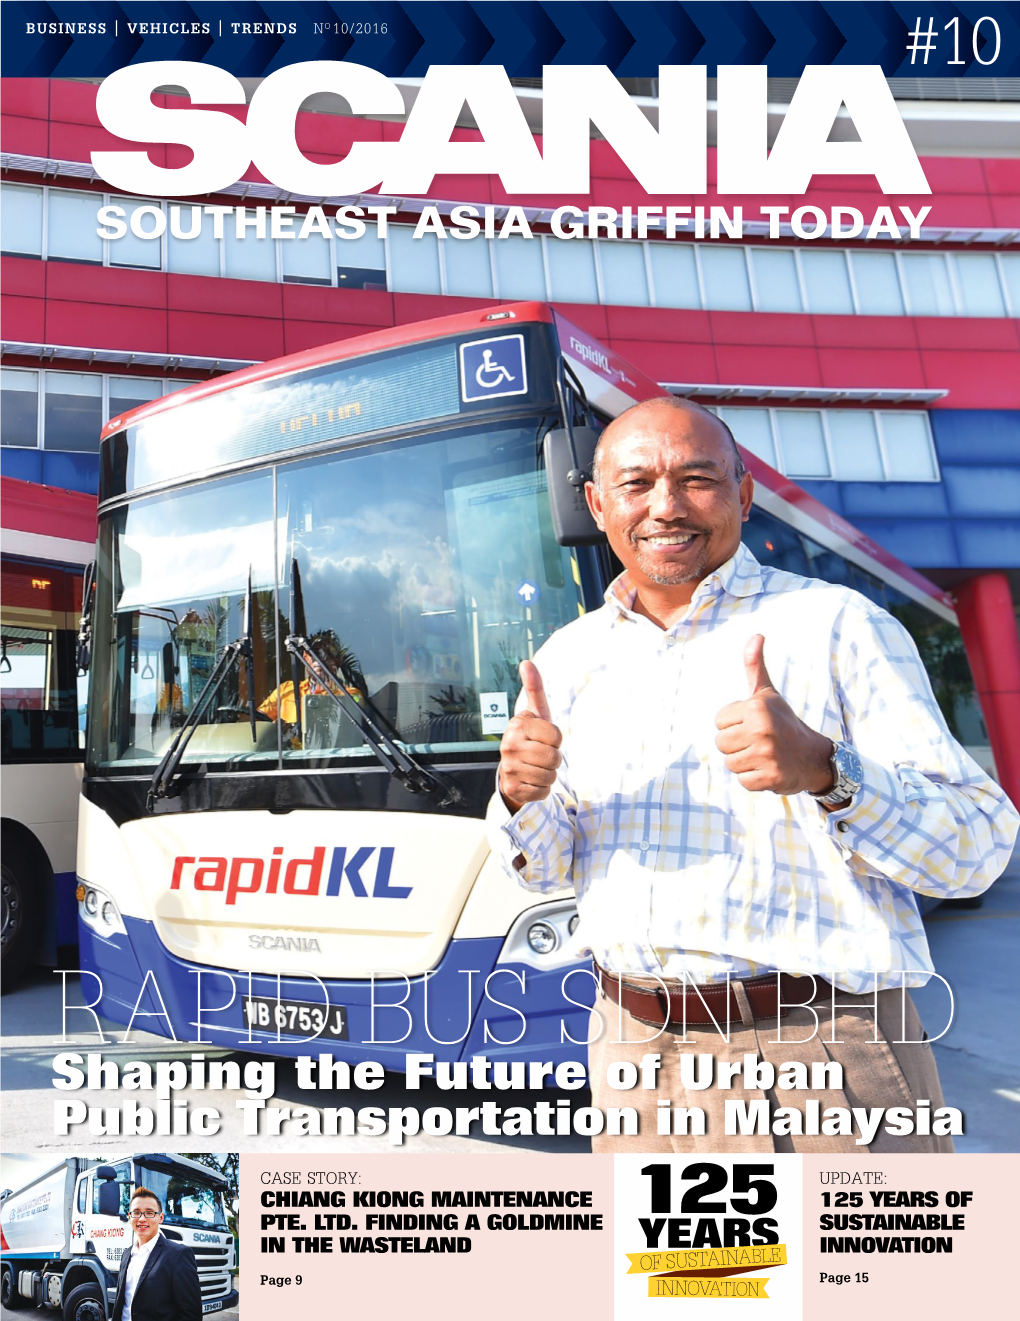 Rapid Bus Sdn Bhd Shaping the Future of Urban Public Transportation in Malaysia